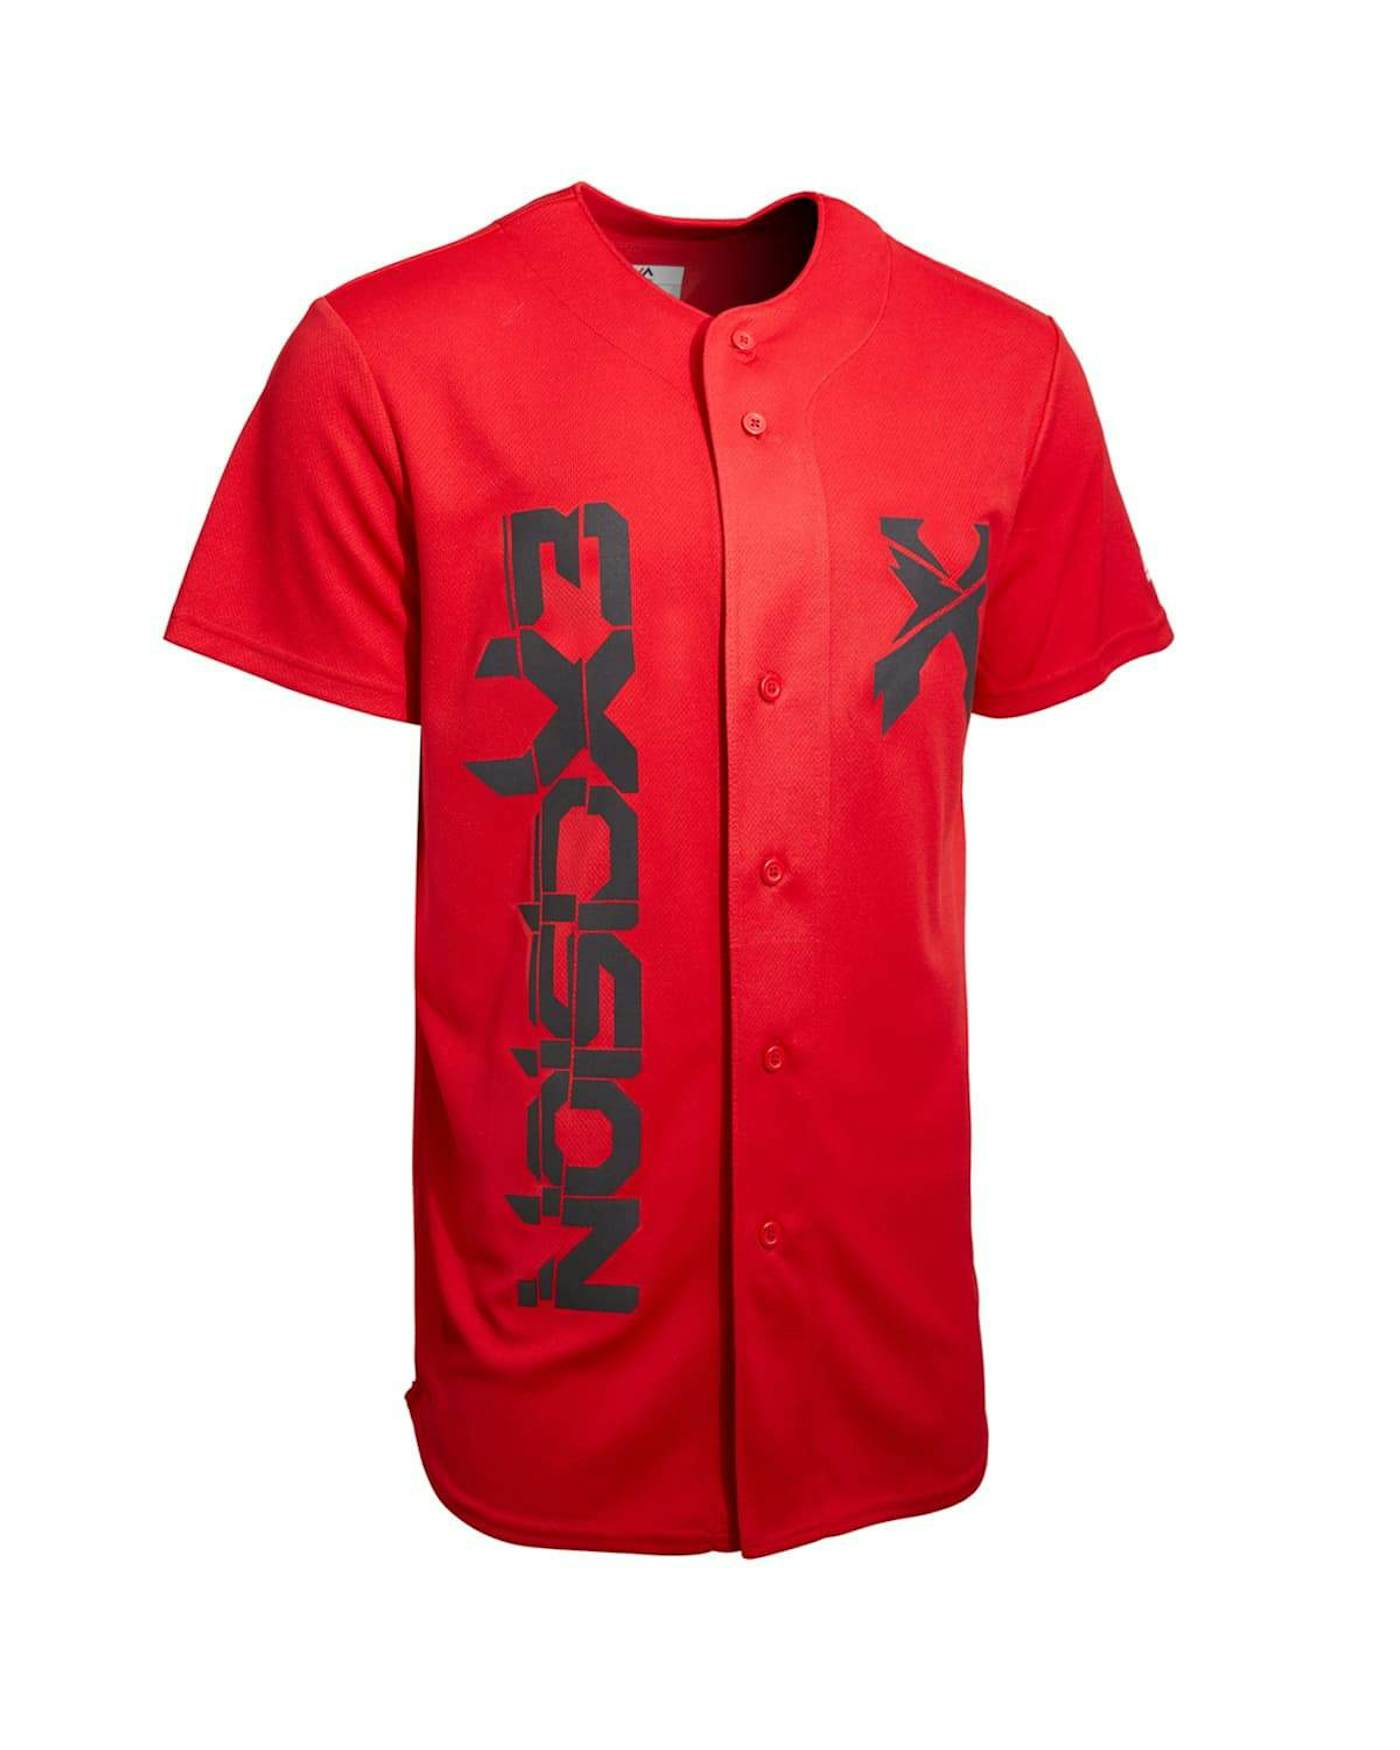 Excision 'Headbanger' Reflective Baseball Jersey - Scarlet/Black